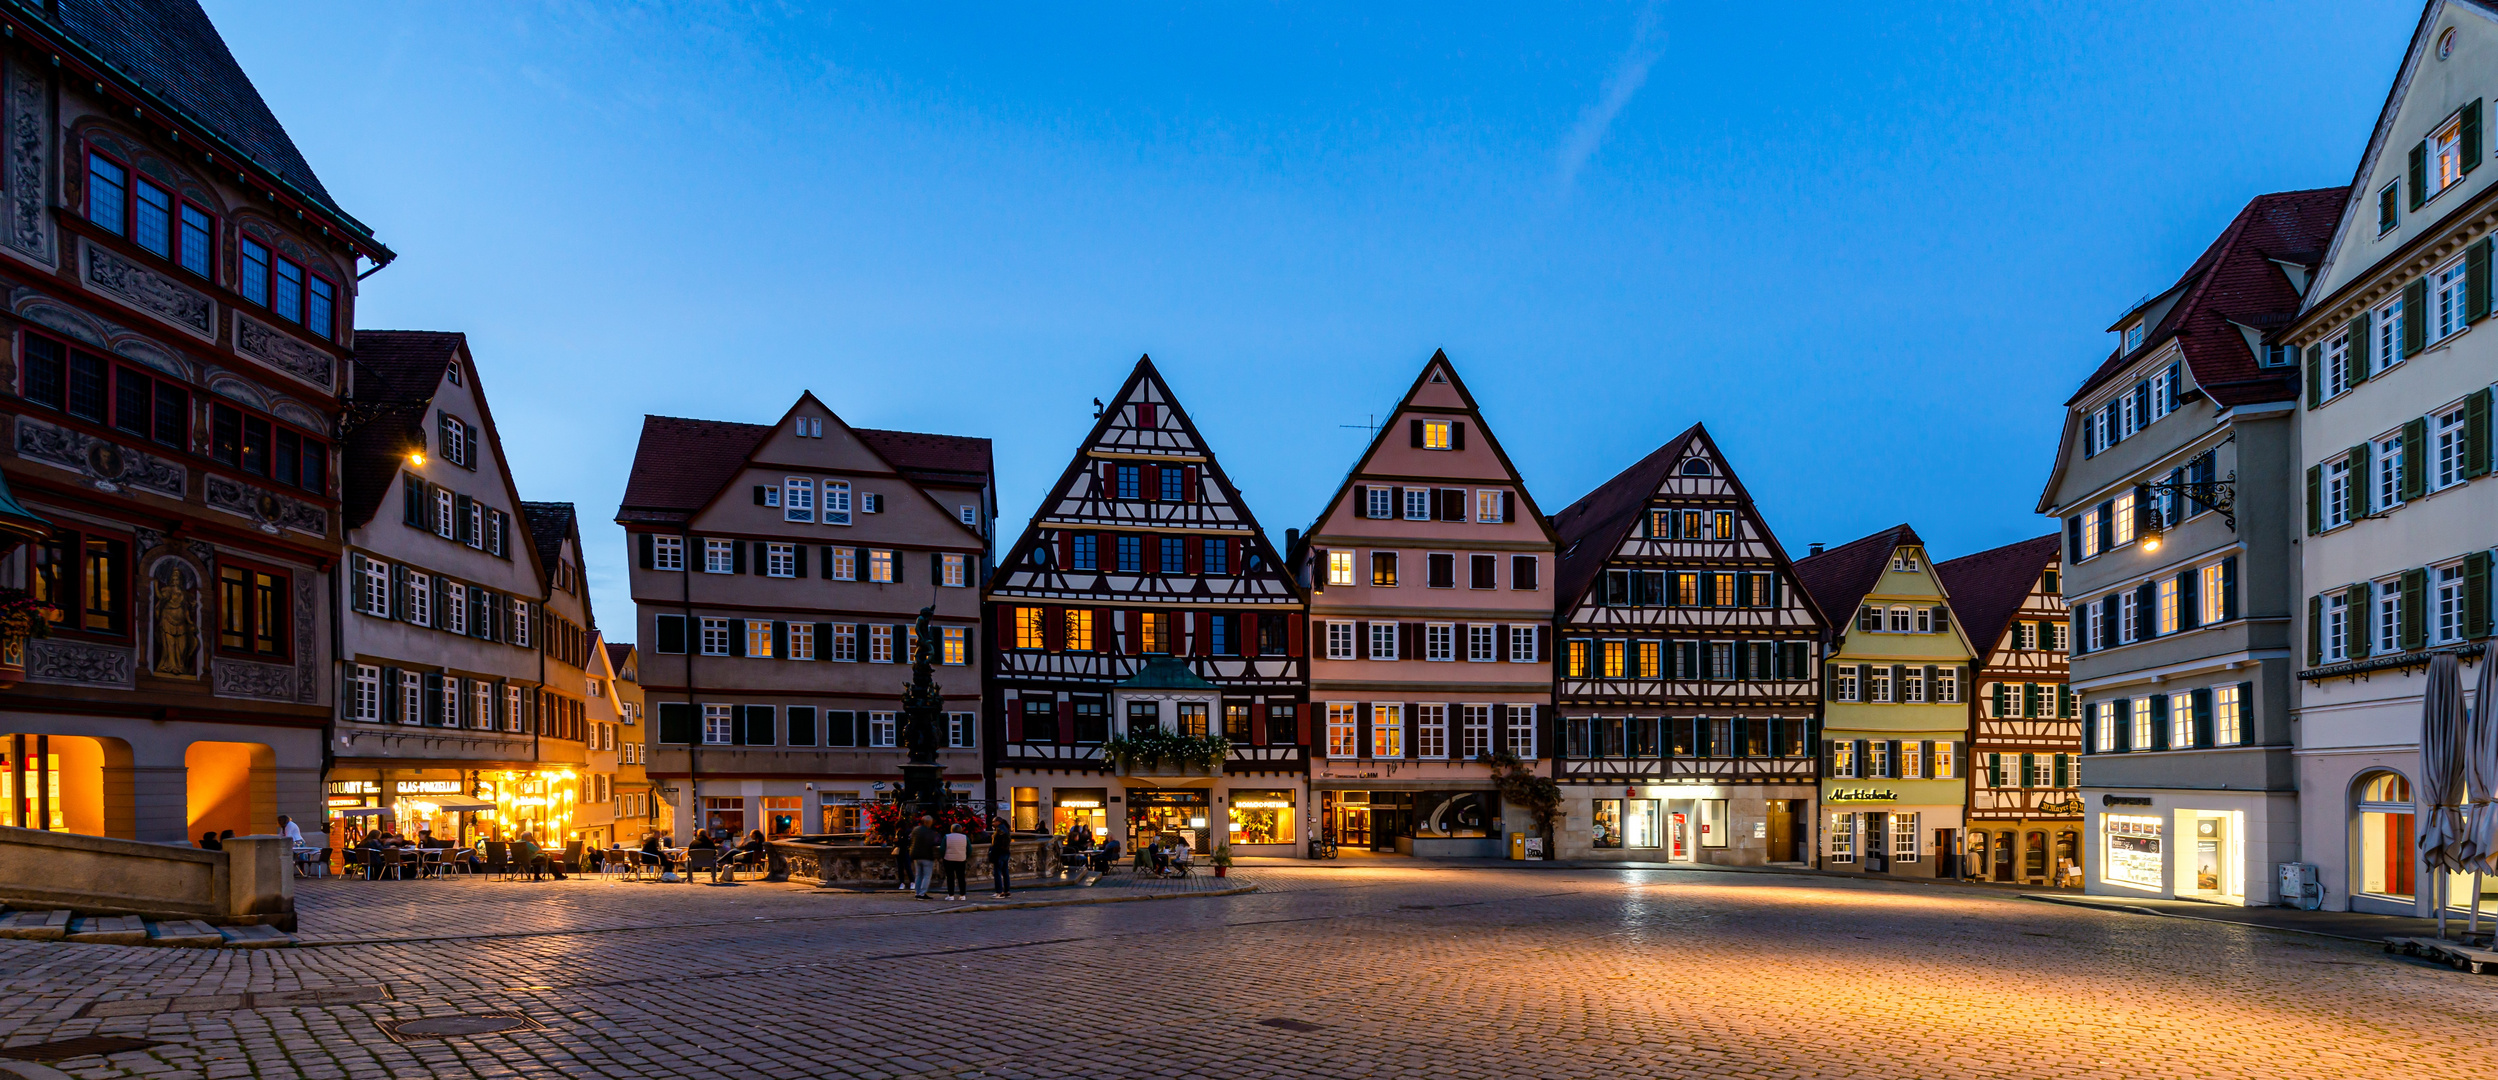 Der Marktplatz in Tübingen